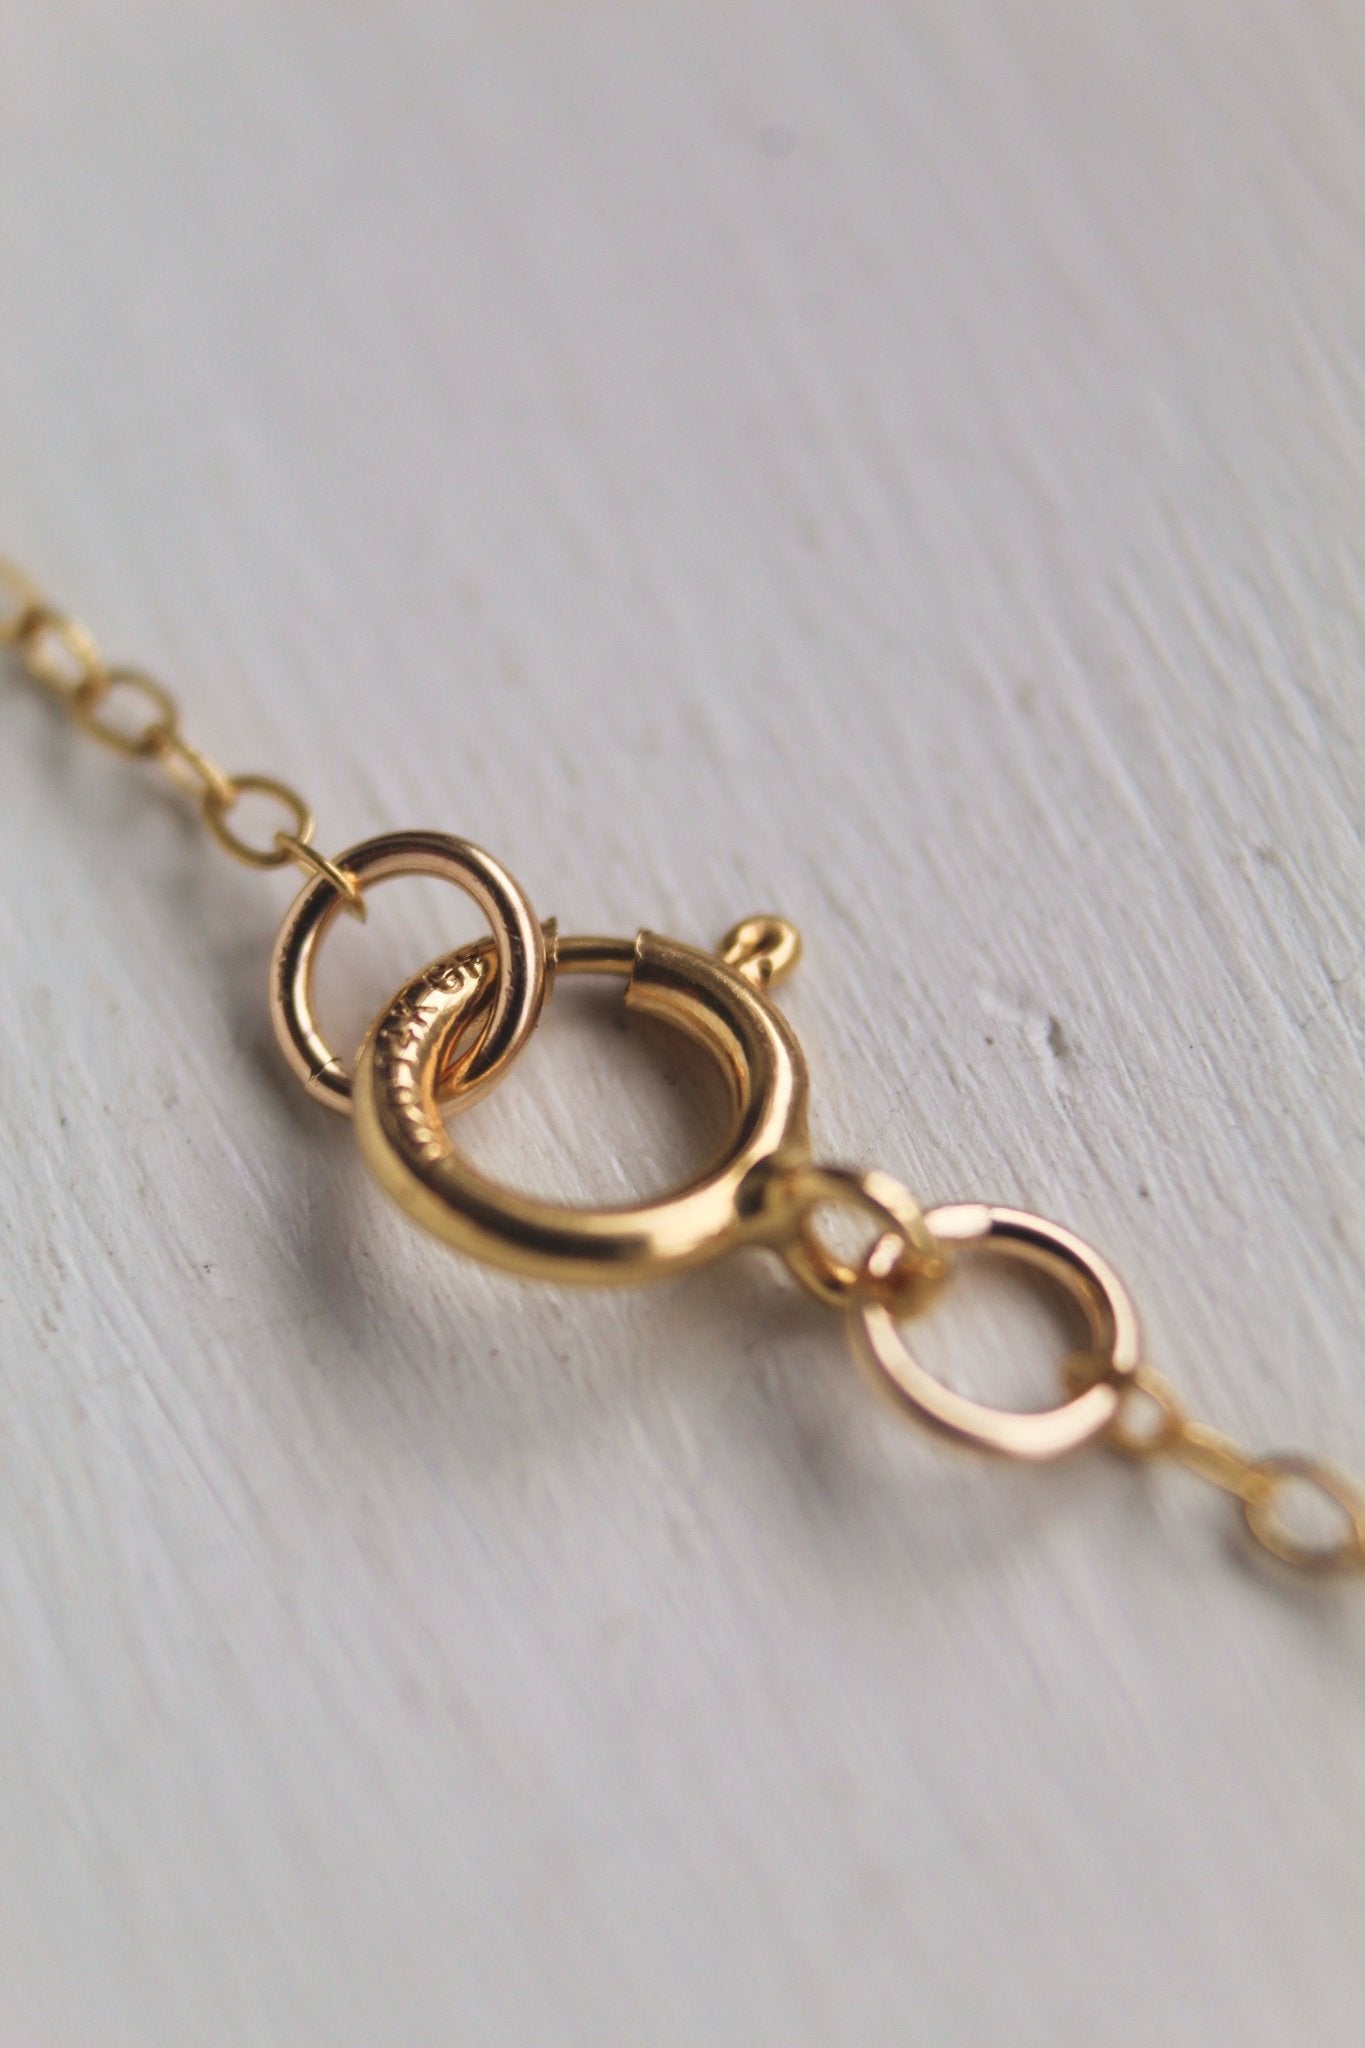 14K Gold Leaf Necklace - Jewellery Hut